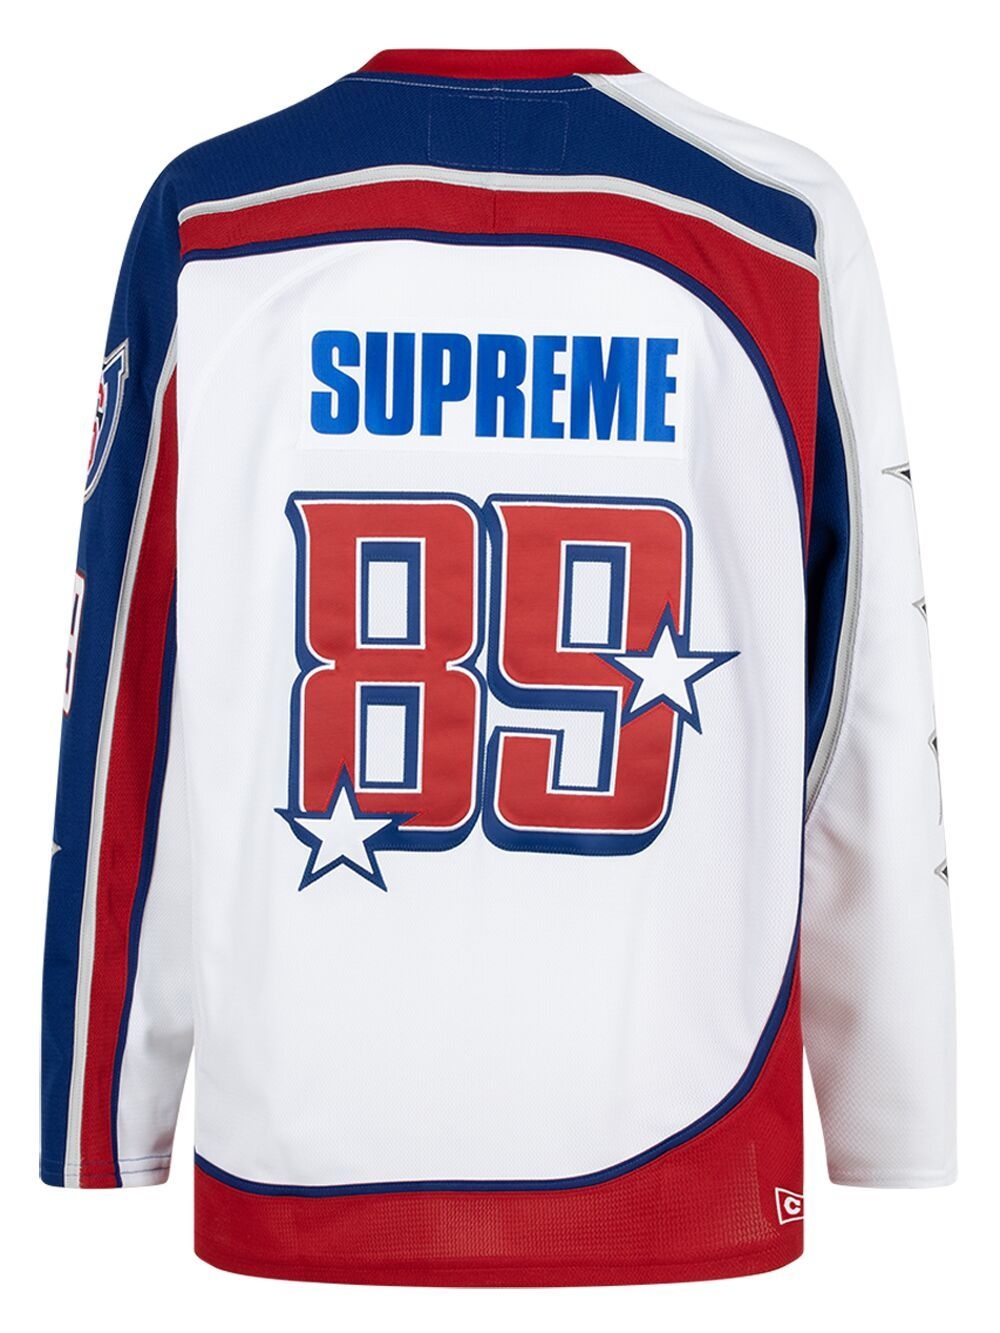 Supreme x CCM All Stars hockey jersey T-shirt